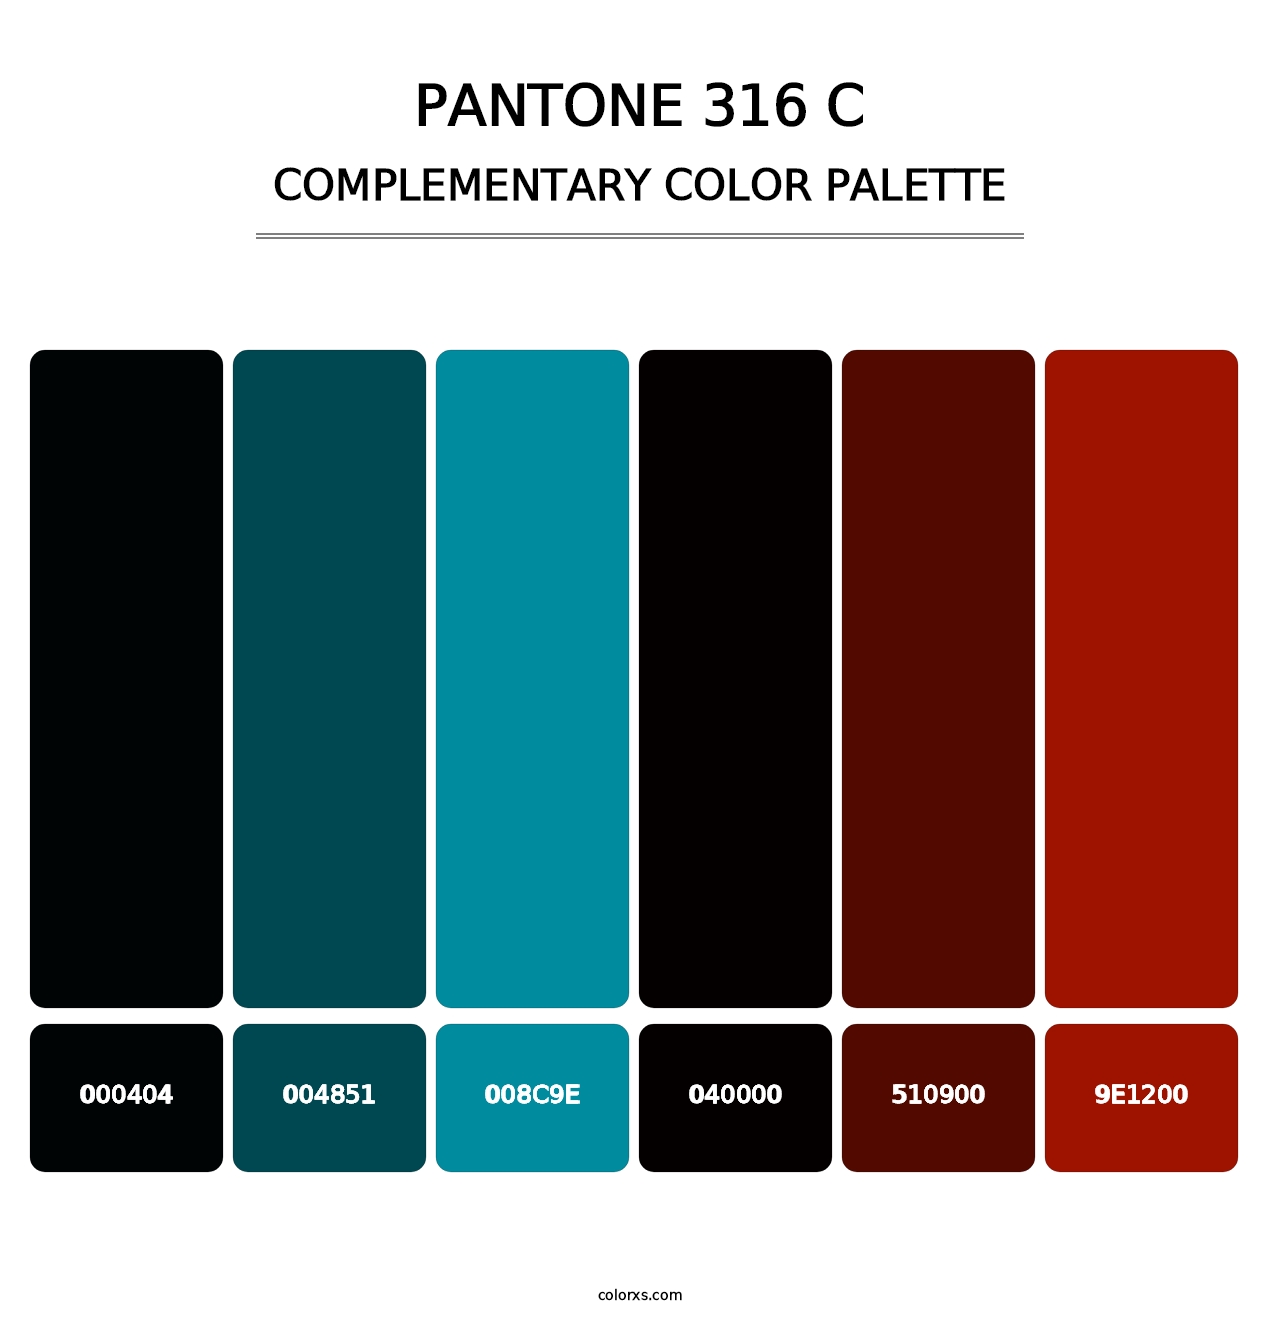 PANTONE 316 C - Complementary Color Palette